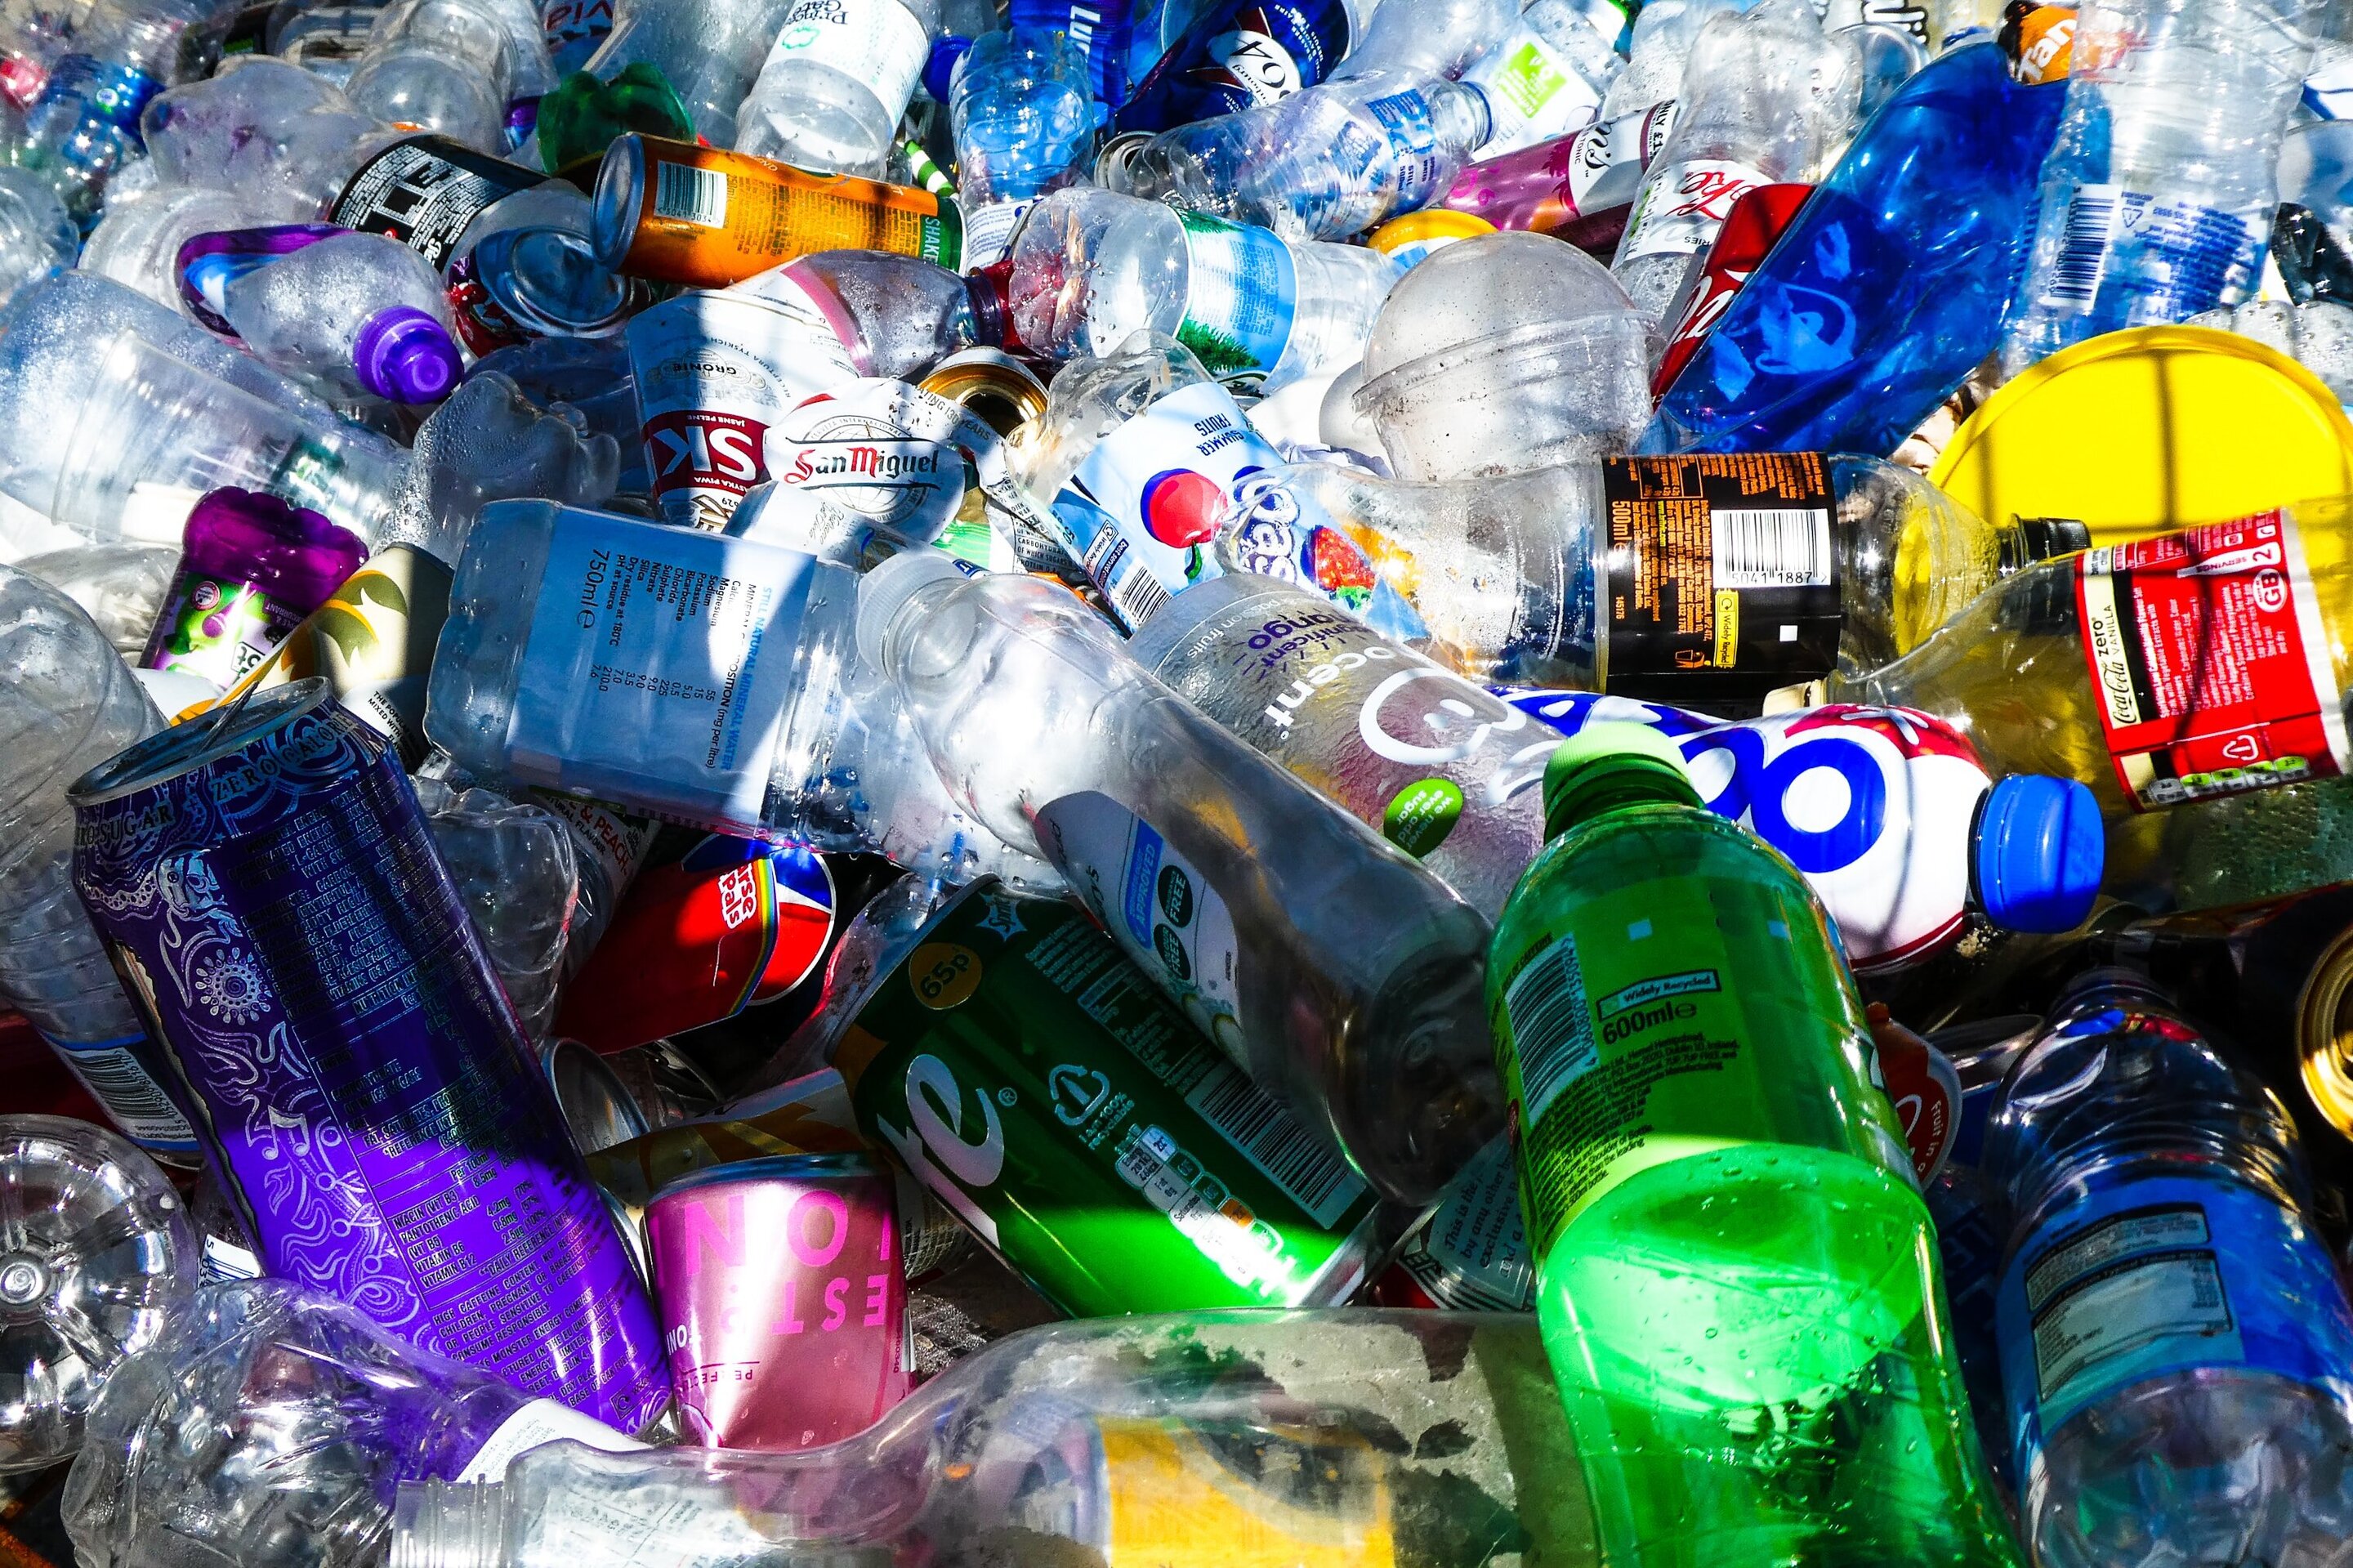 Rethinking plastics: Team issues urgent call to action on plastics pollution